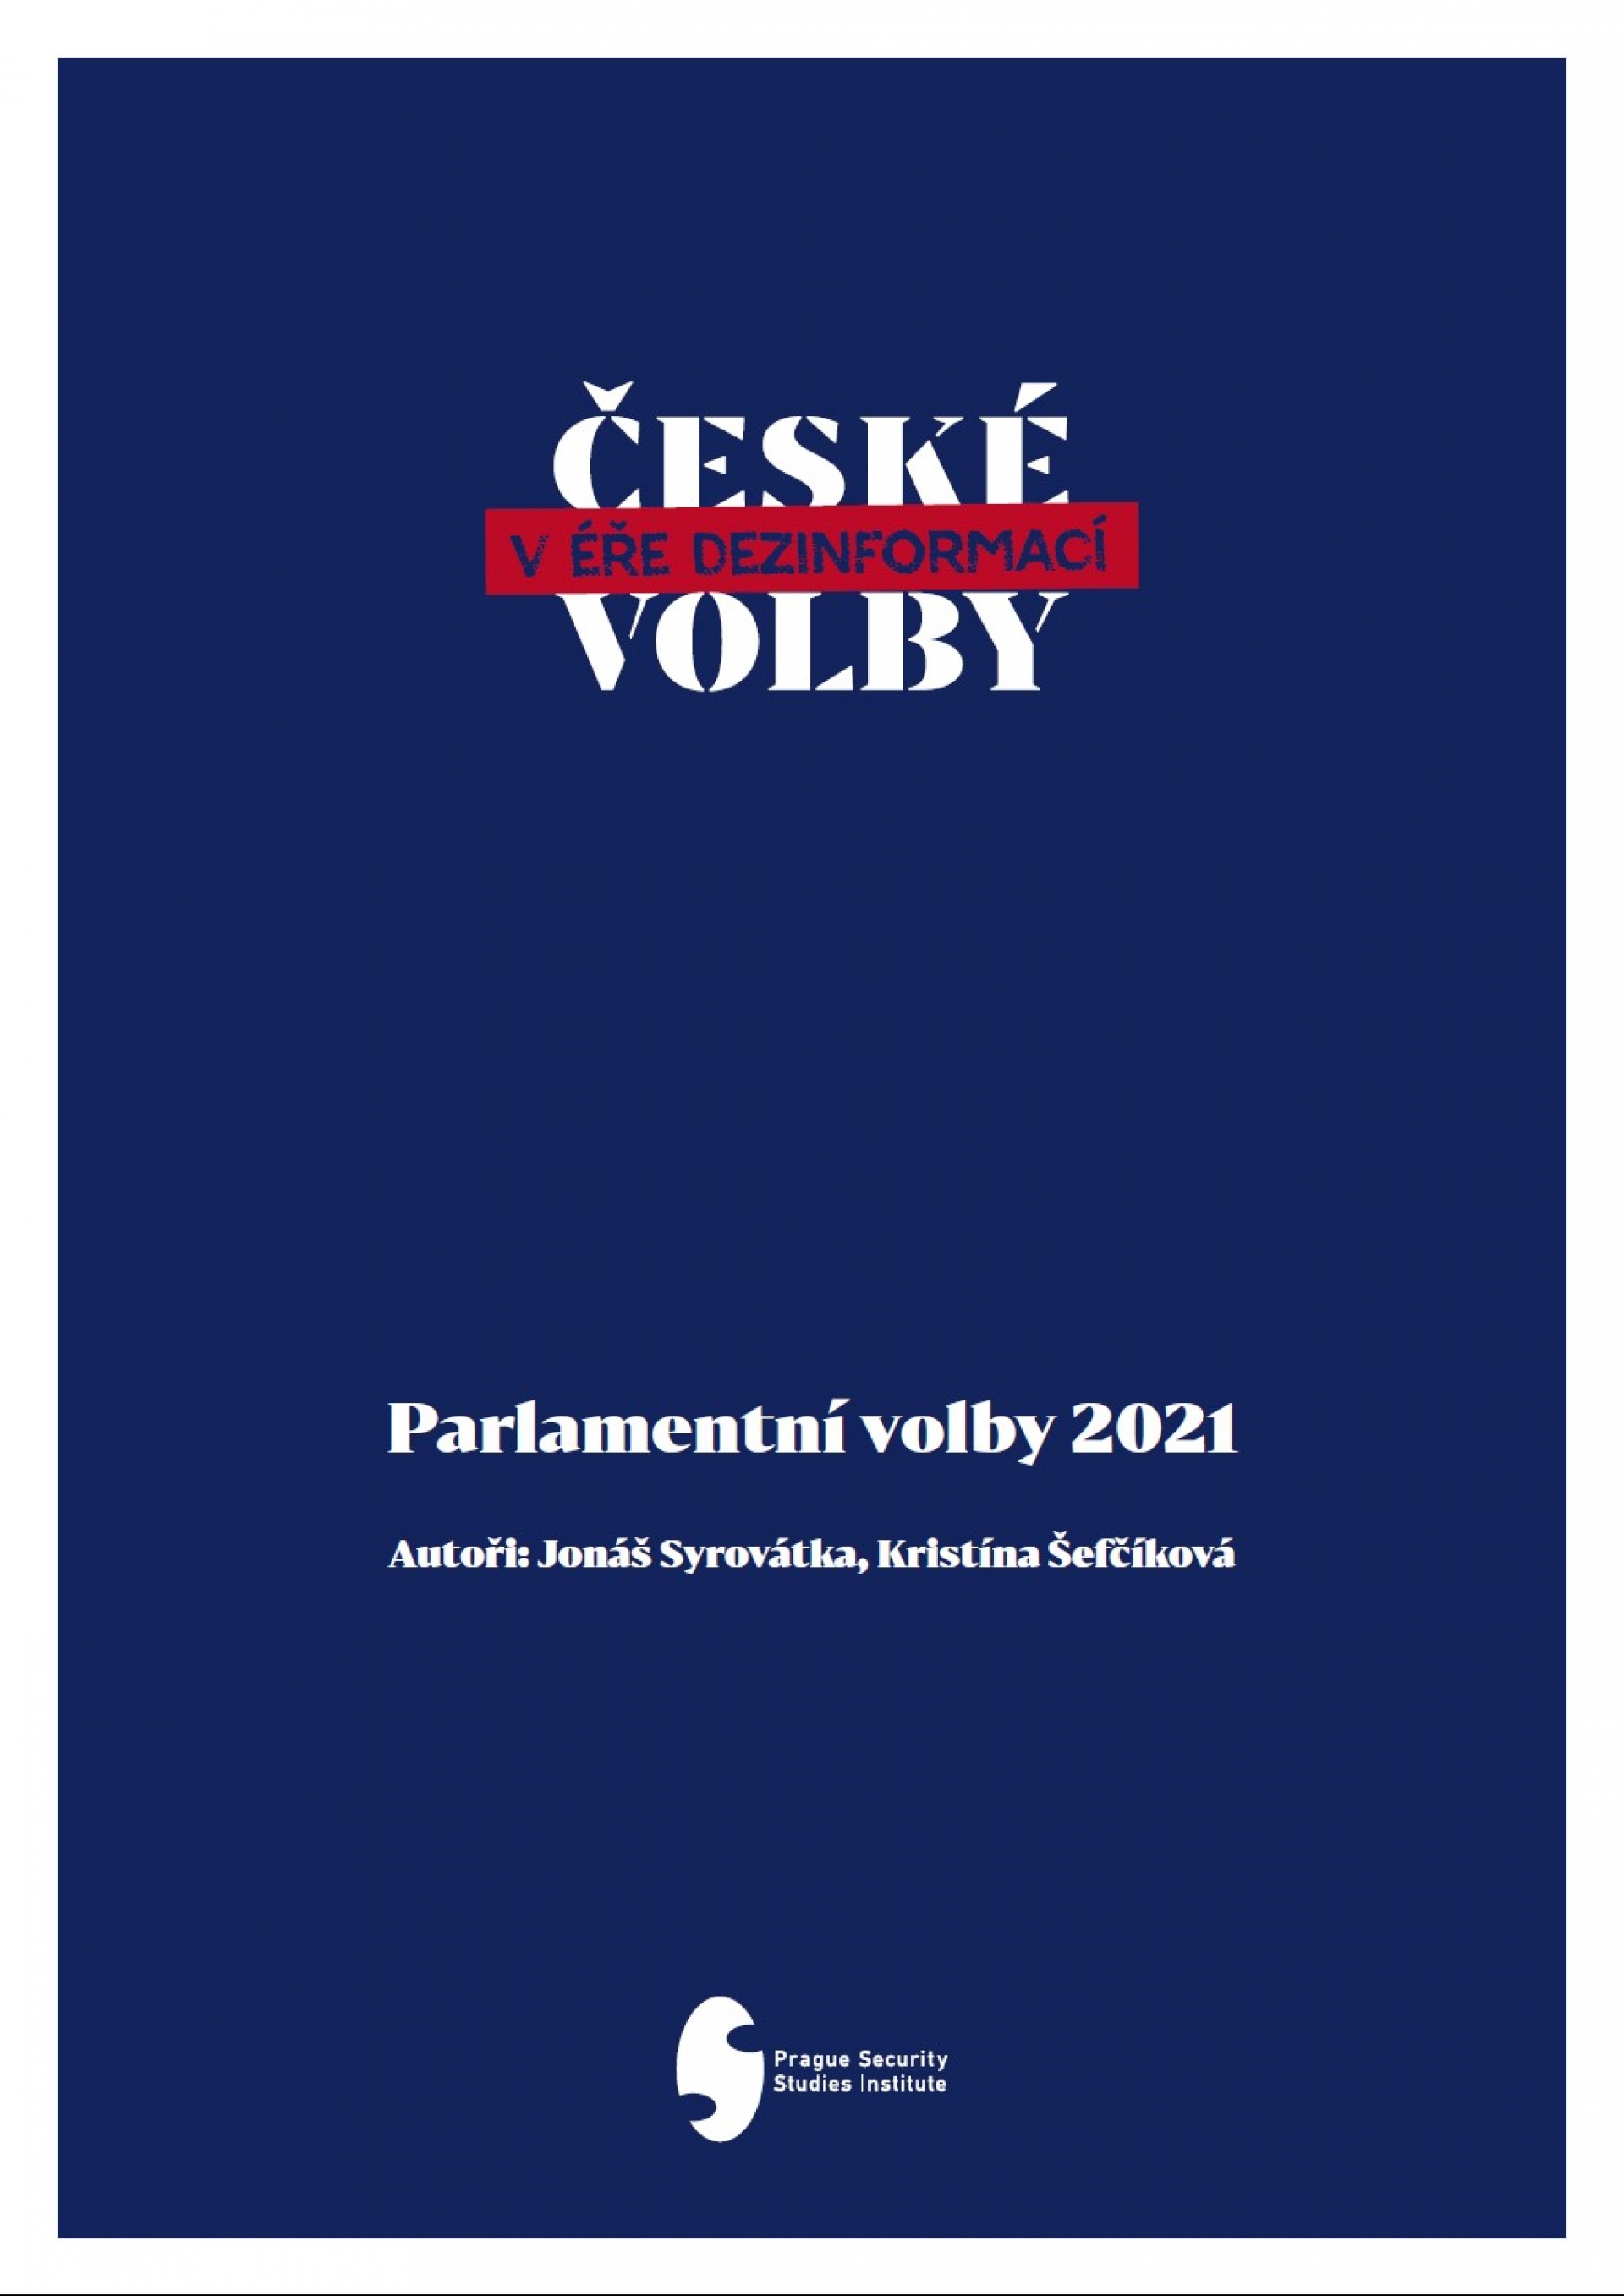 Parlamentní volby 2021 coverpage